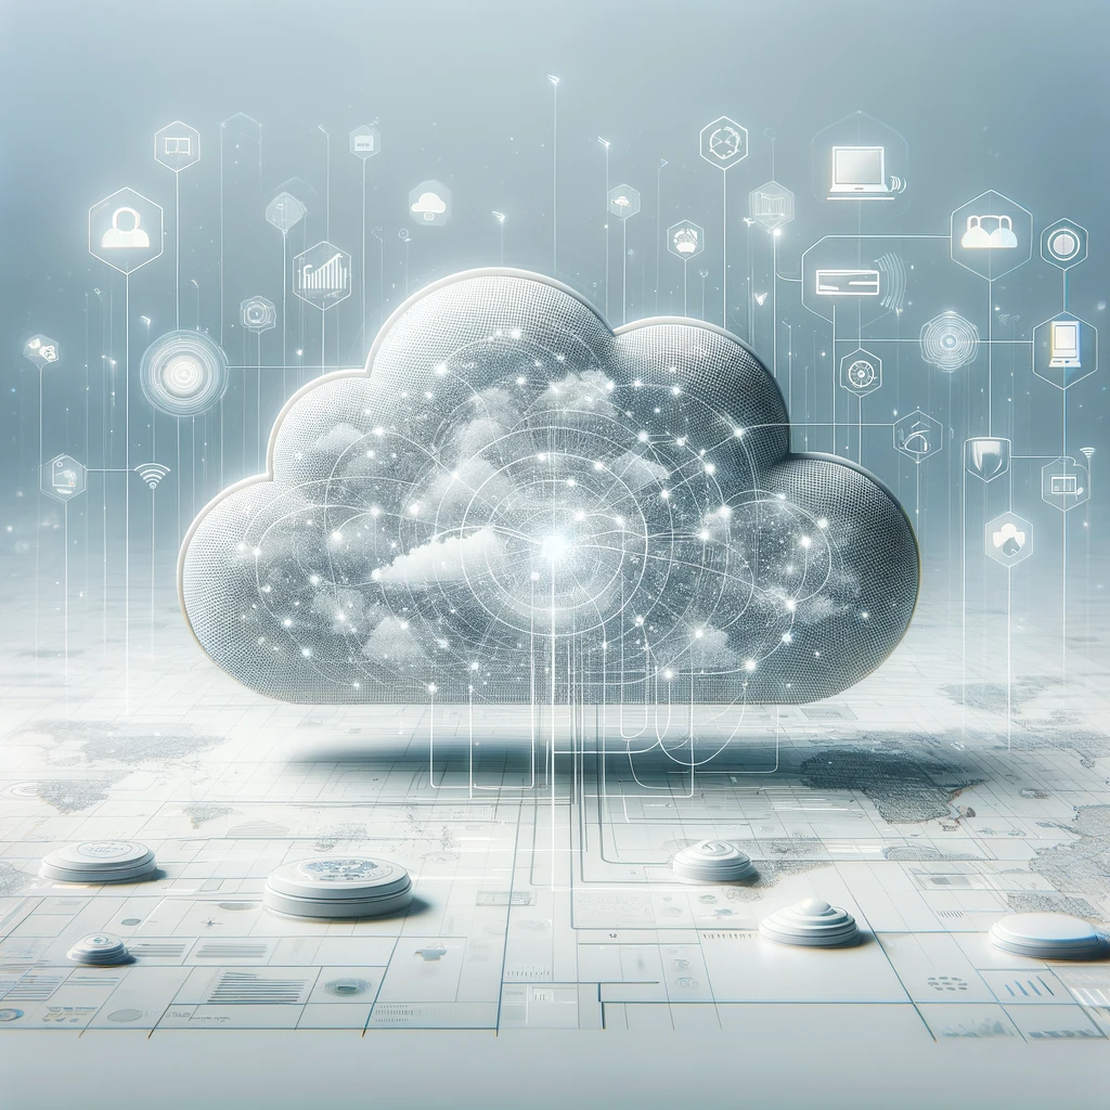 Cloud Computing & Infrastructure